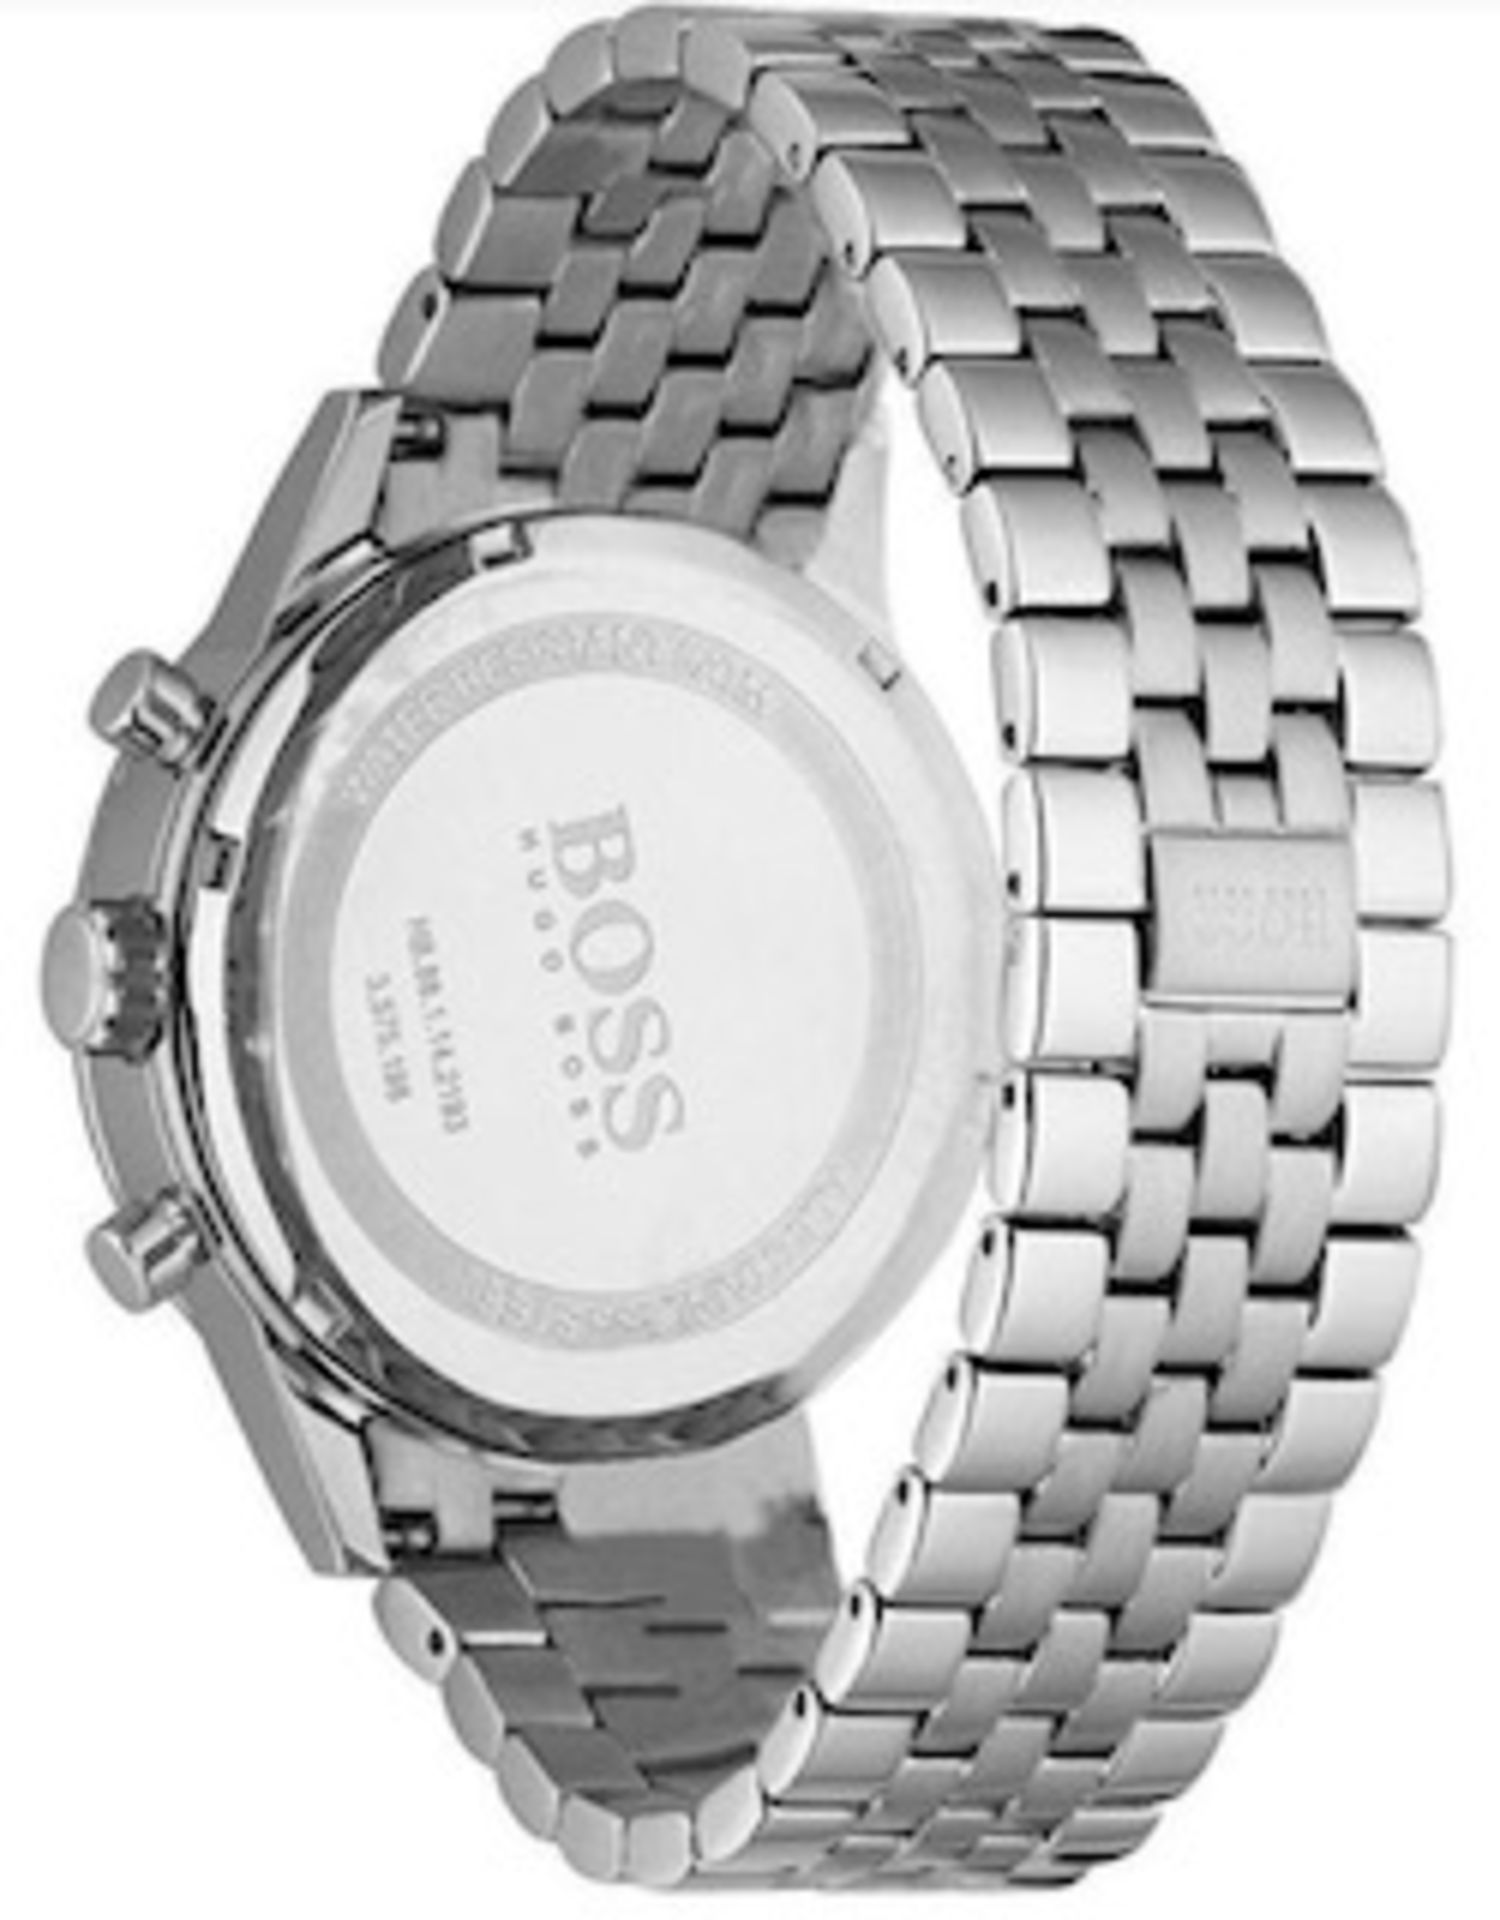 Hugo Boss 1512446 Men's Aeroliner Black Dial Silver Bracelet Chronograph Watch Undeniably Stylish - Image 6 of 6